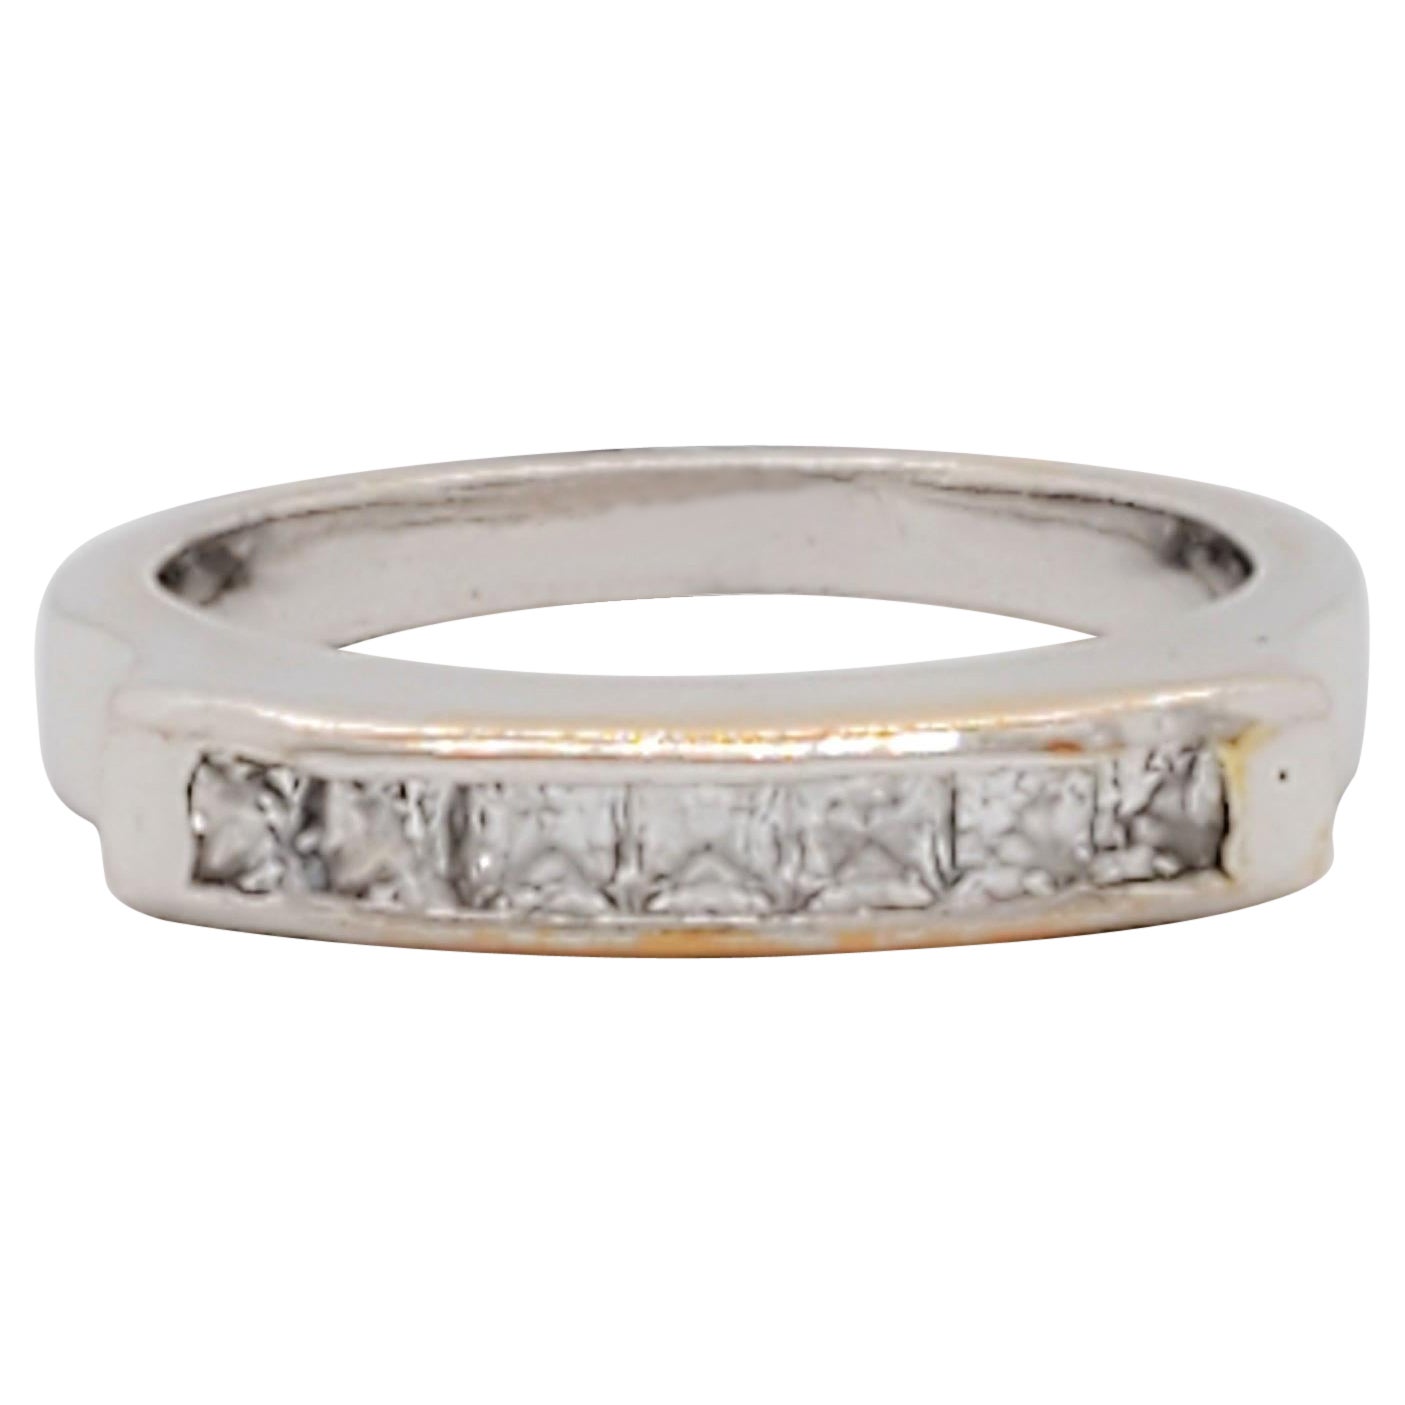 White Diamond Square Band Ring in 18k White Gold